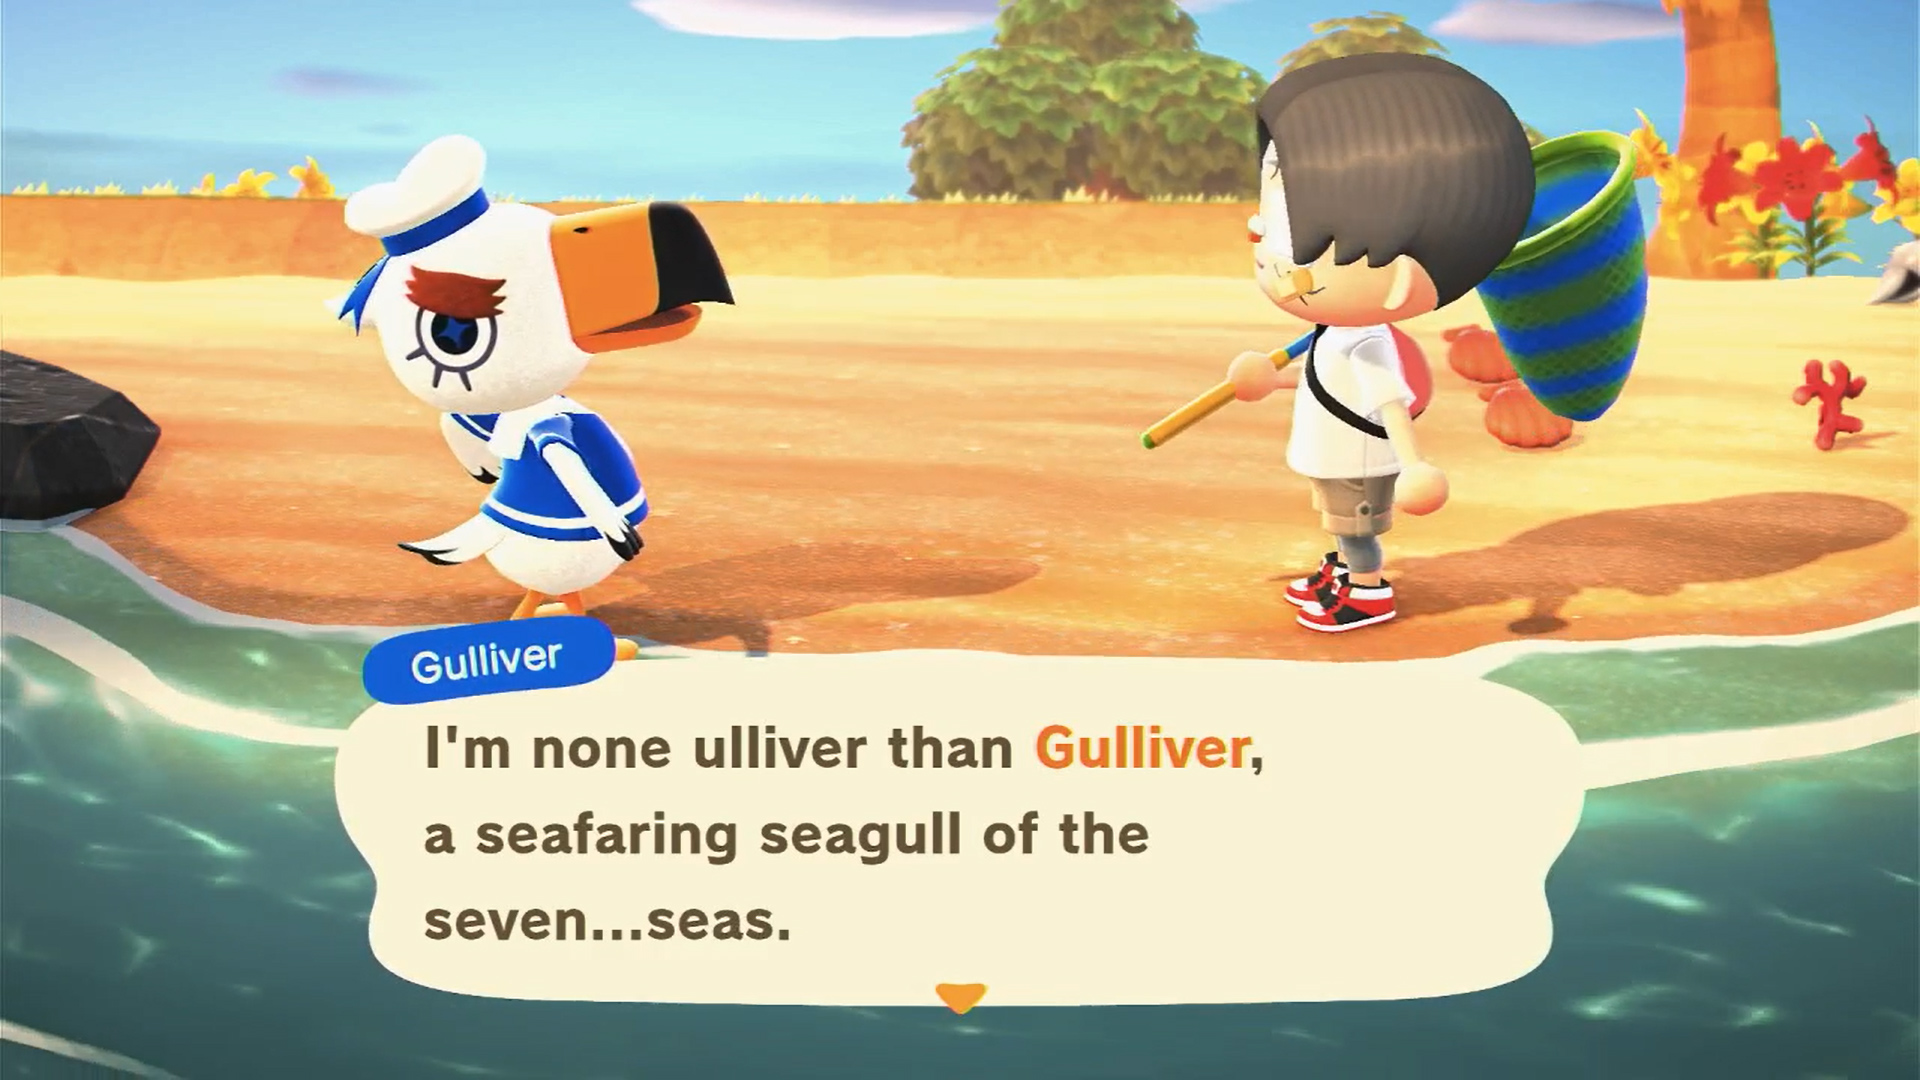 Screenshot of Gulliver introducing himself in Animal Crossing